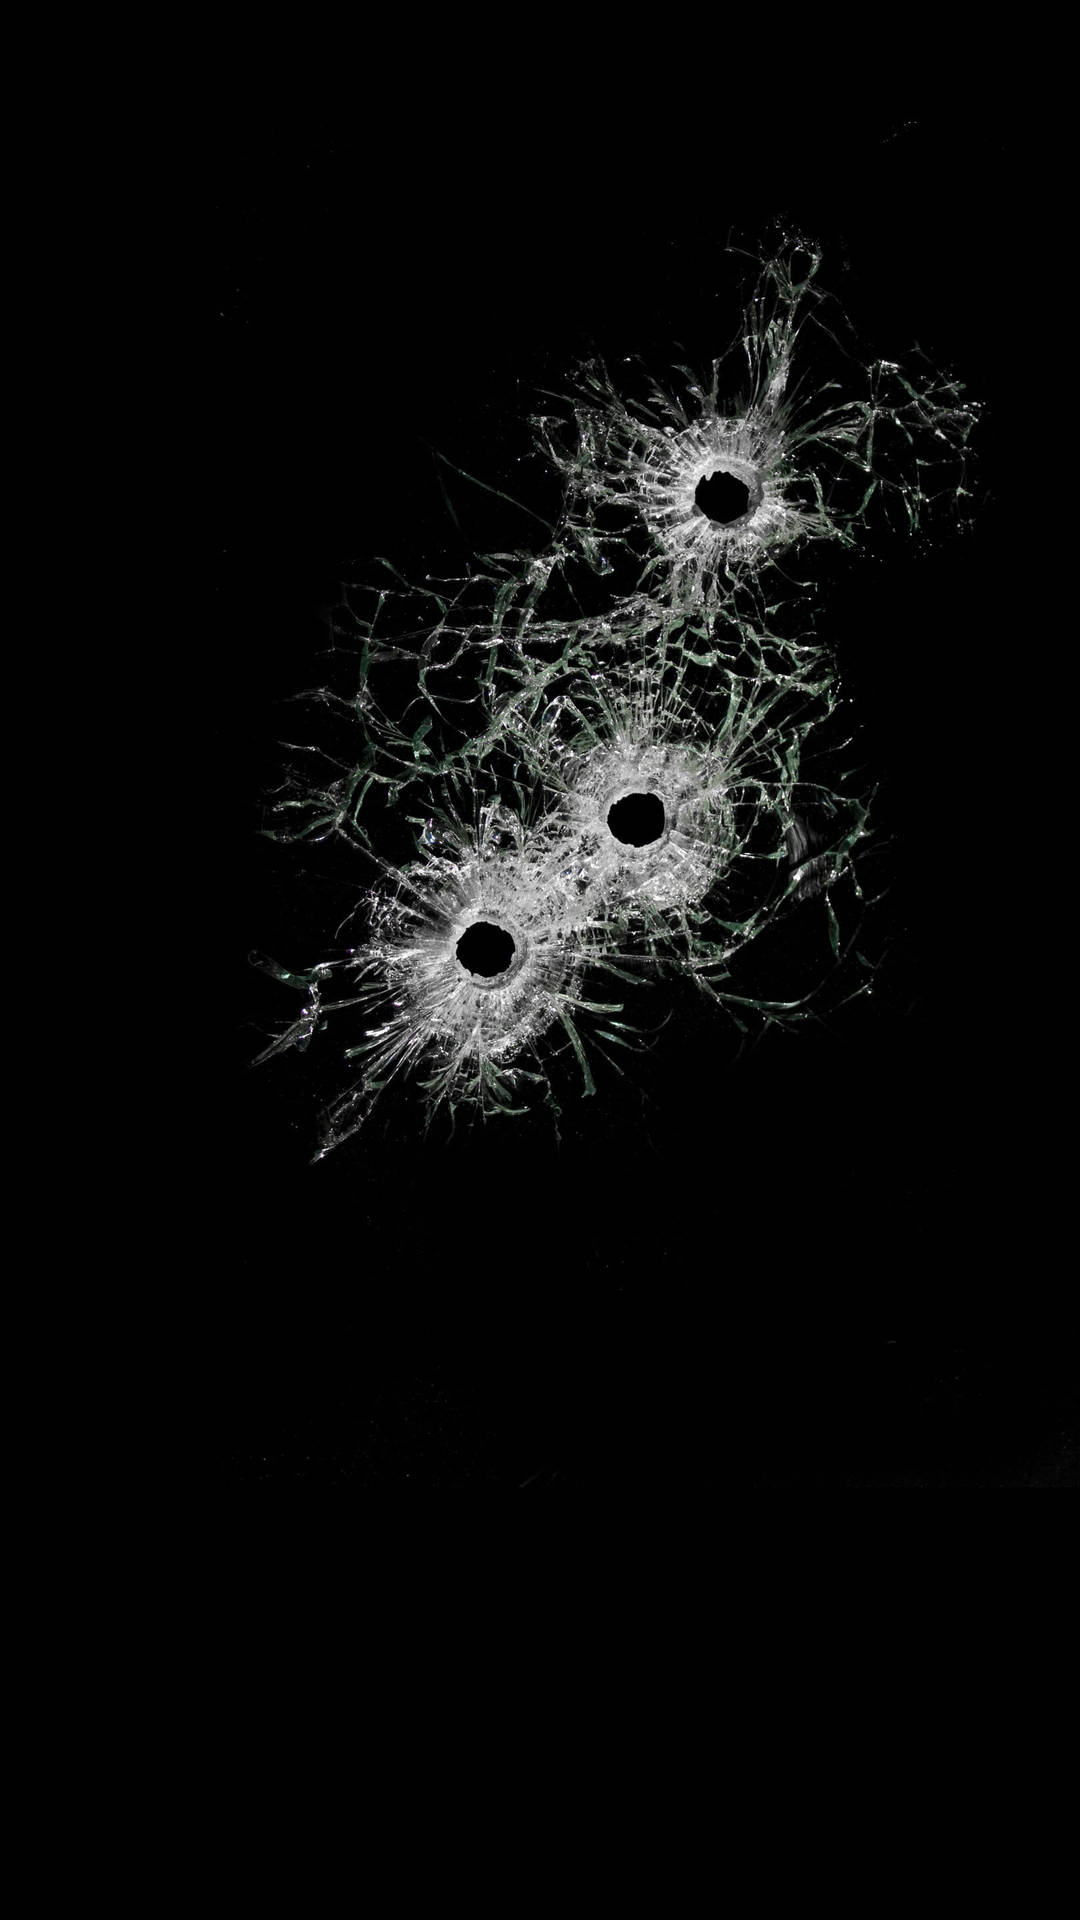 Bullet Holes On Broken Glass Wallpaper